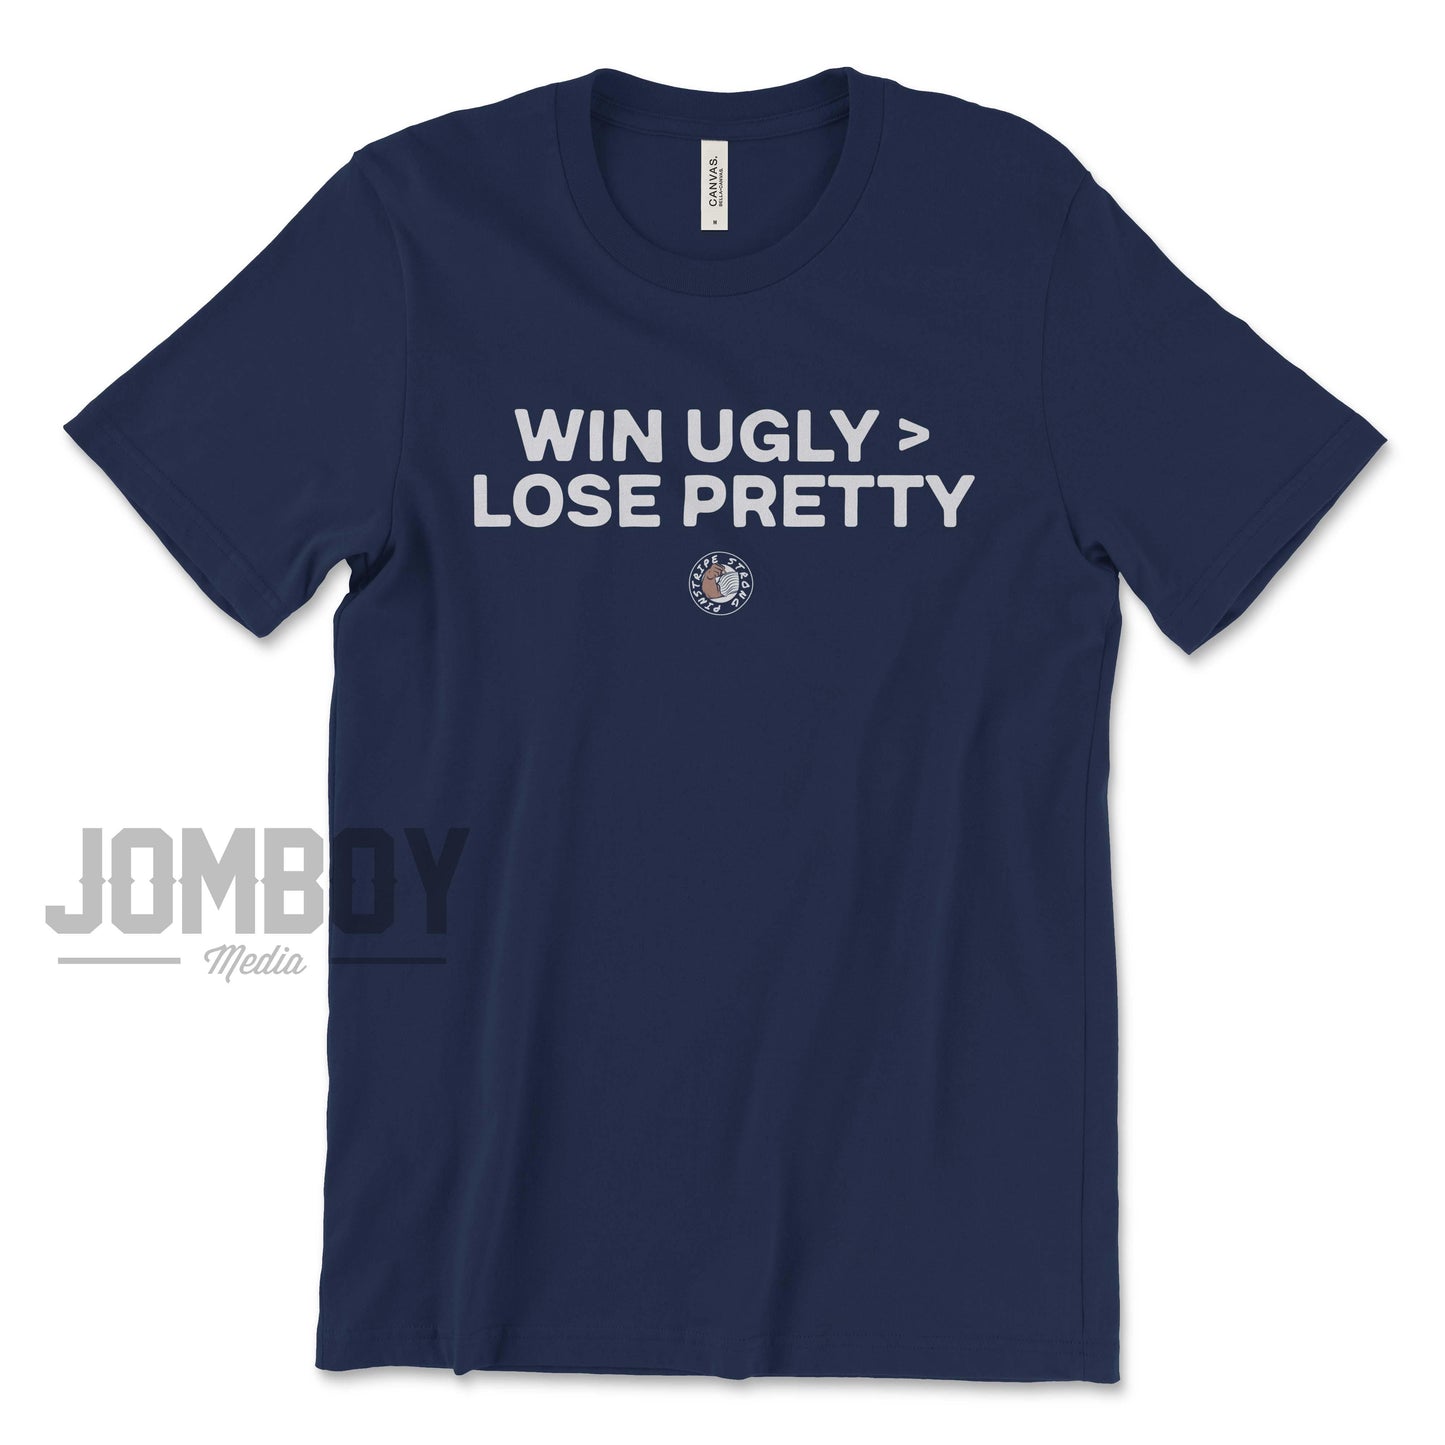 Winning Ugly Is Better Than Losing Pretty | T-Shirt - Jomboy Media